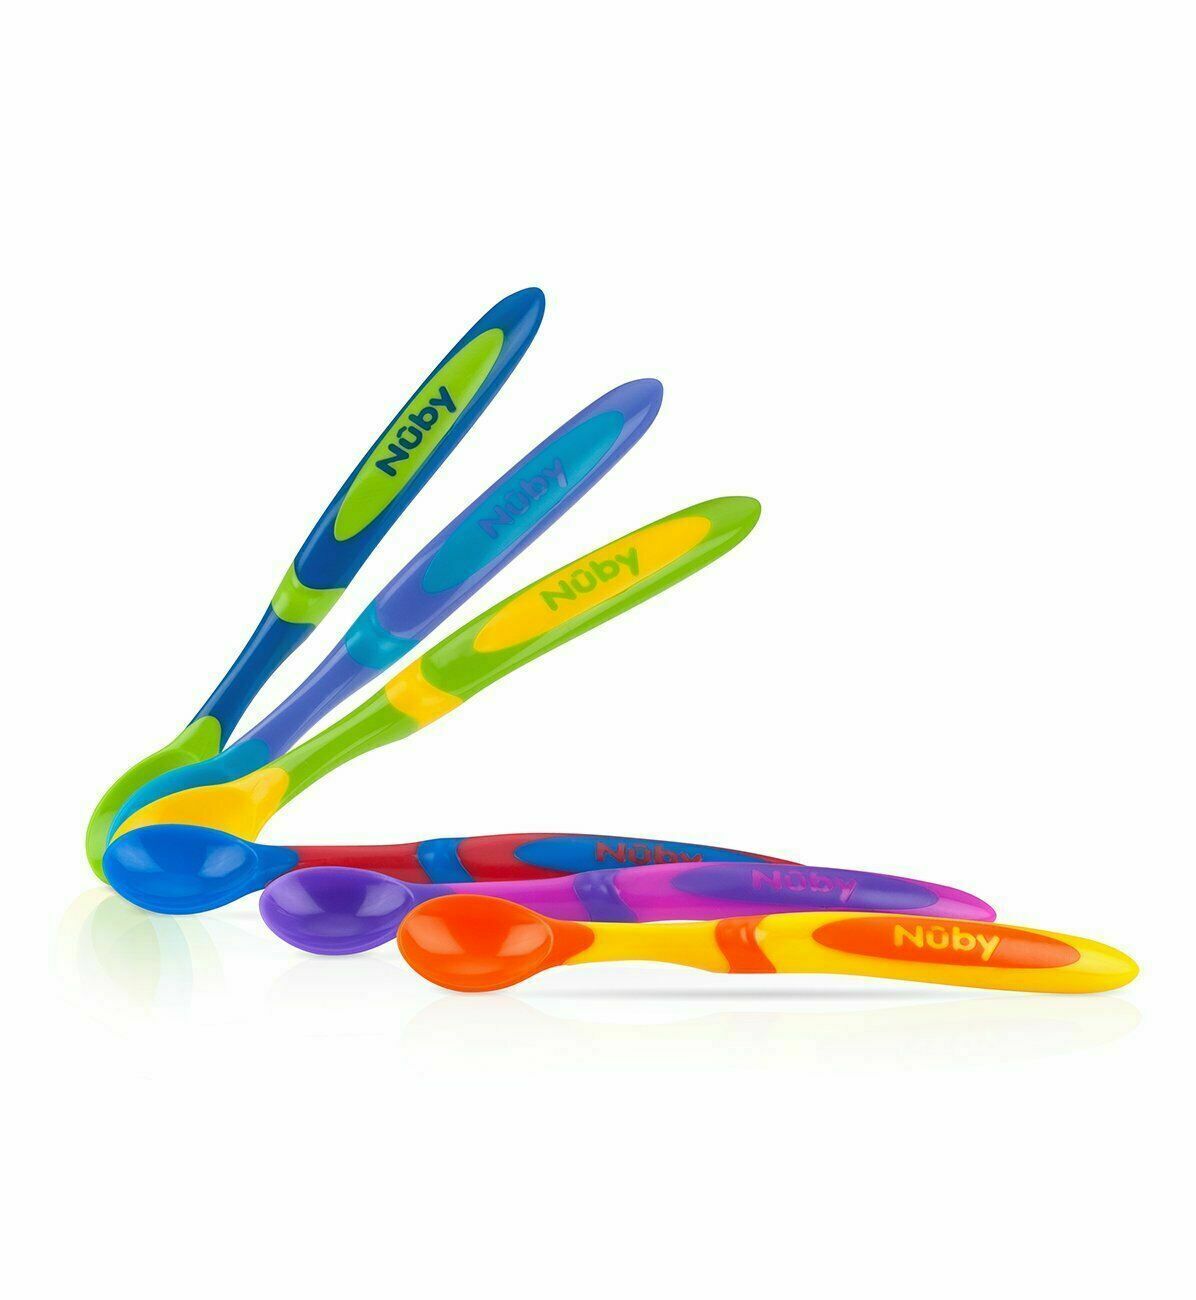 Nuby 6 Piece Fun Feeding Long Handle Weaning Spoons Multi Color NIB - $8.31